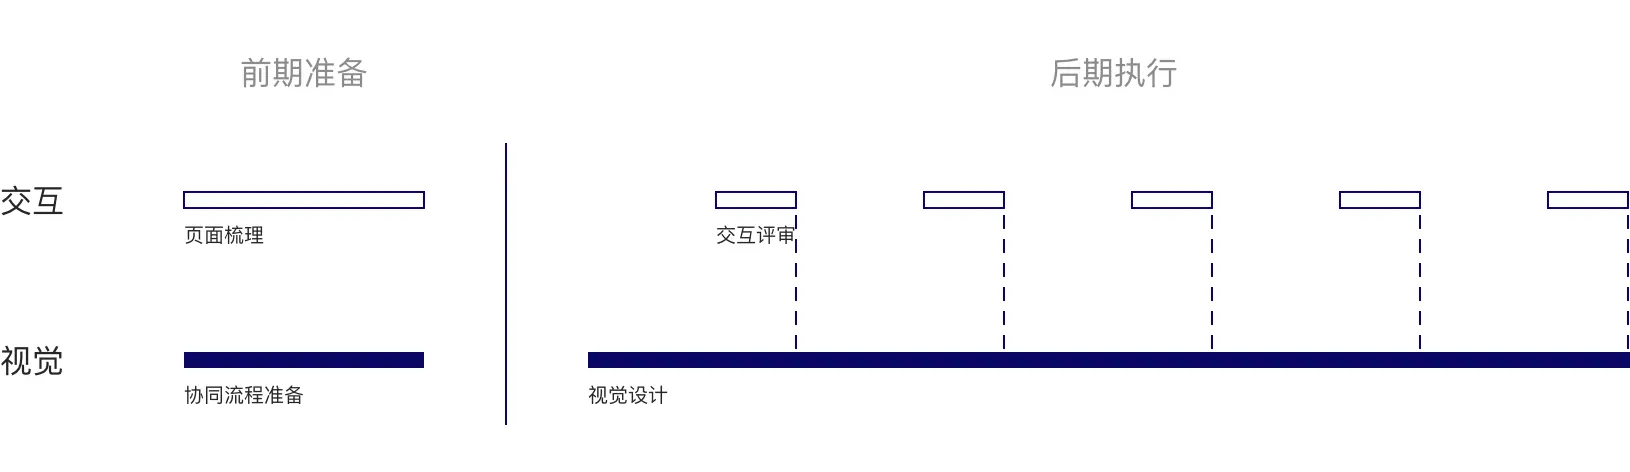 【To G设计赋能】广东省移动警务项目设计总结 | 人人都是产品经理 - 图3